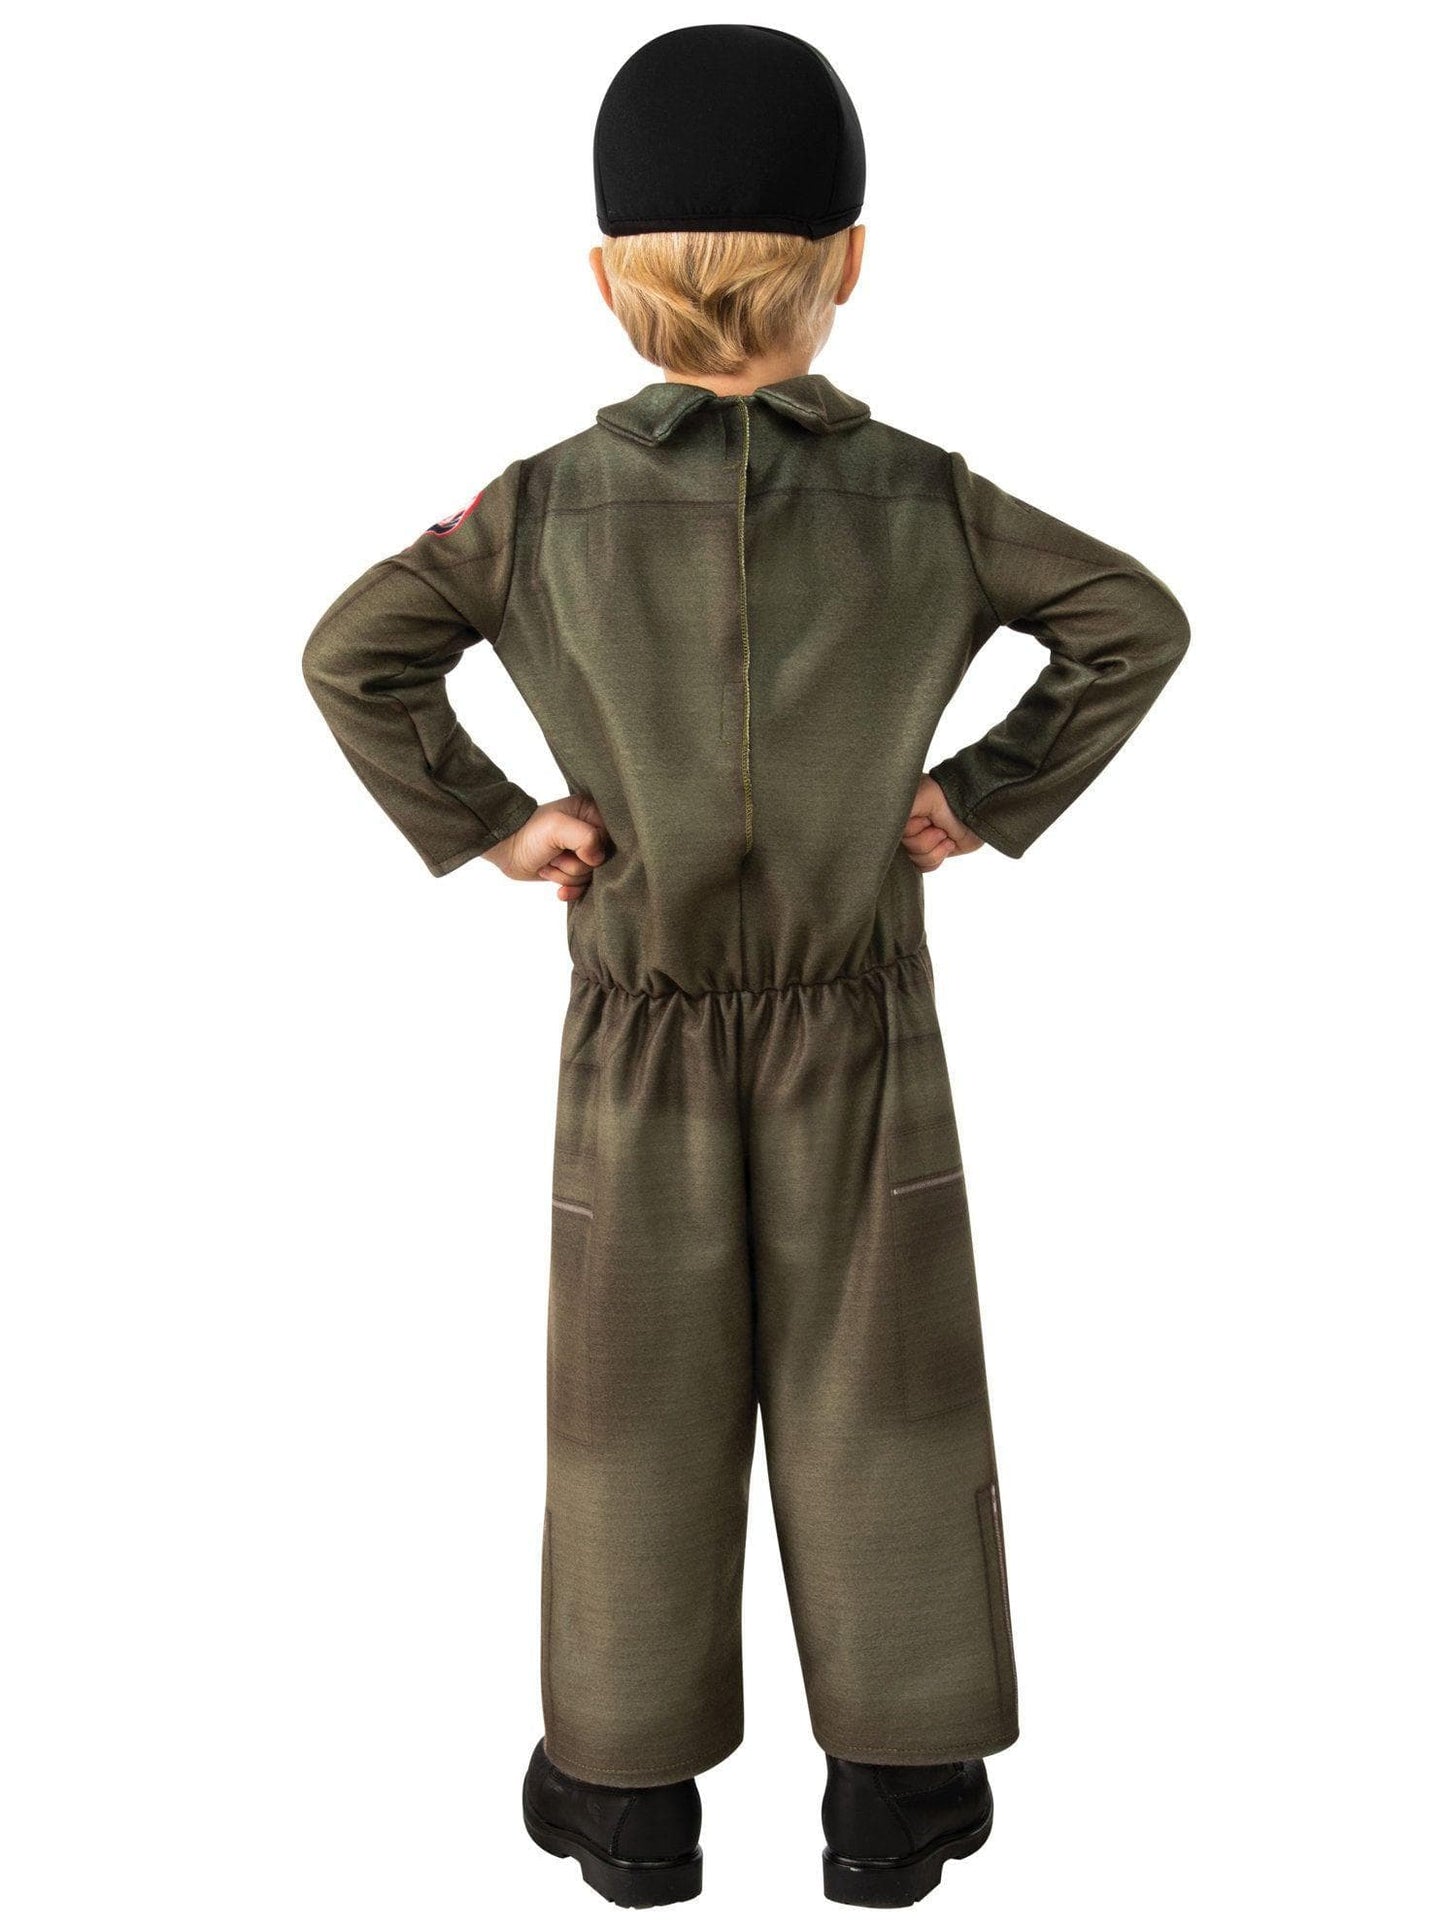 Top Gun Maverick Unisex Toddler Costume